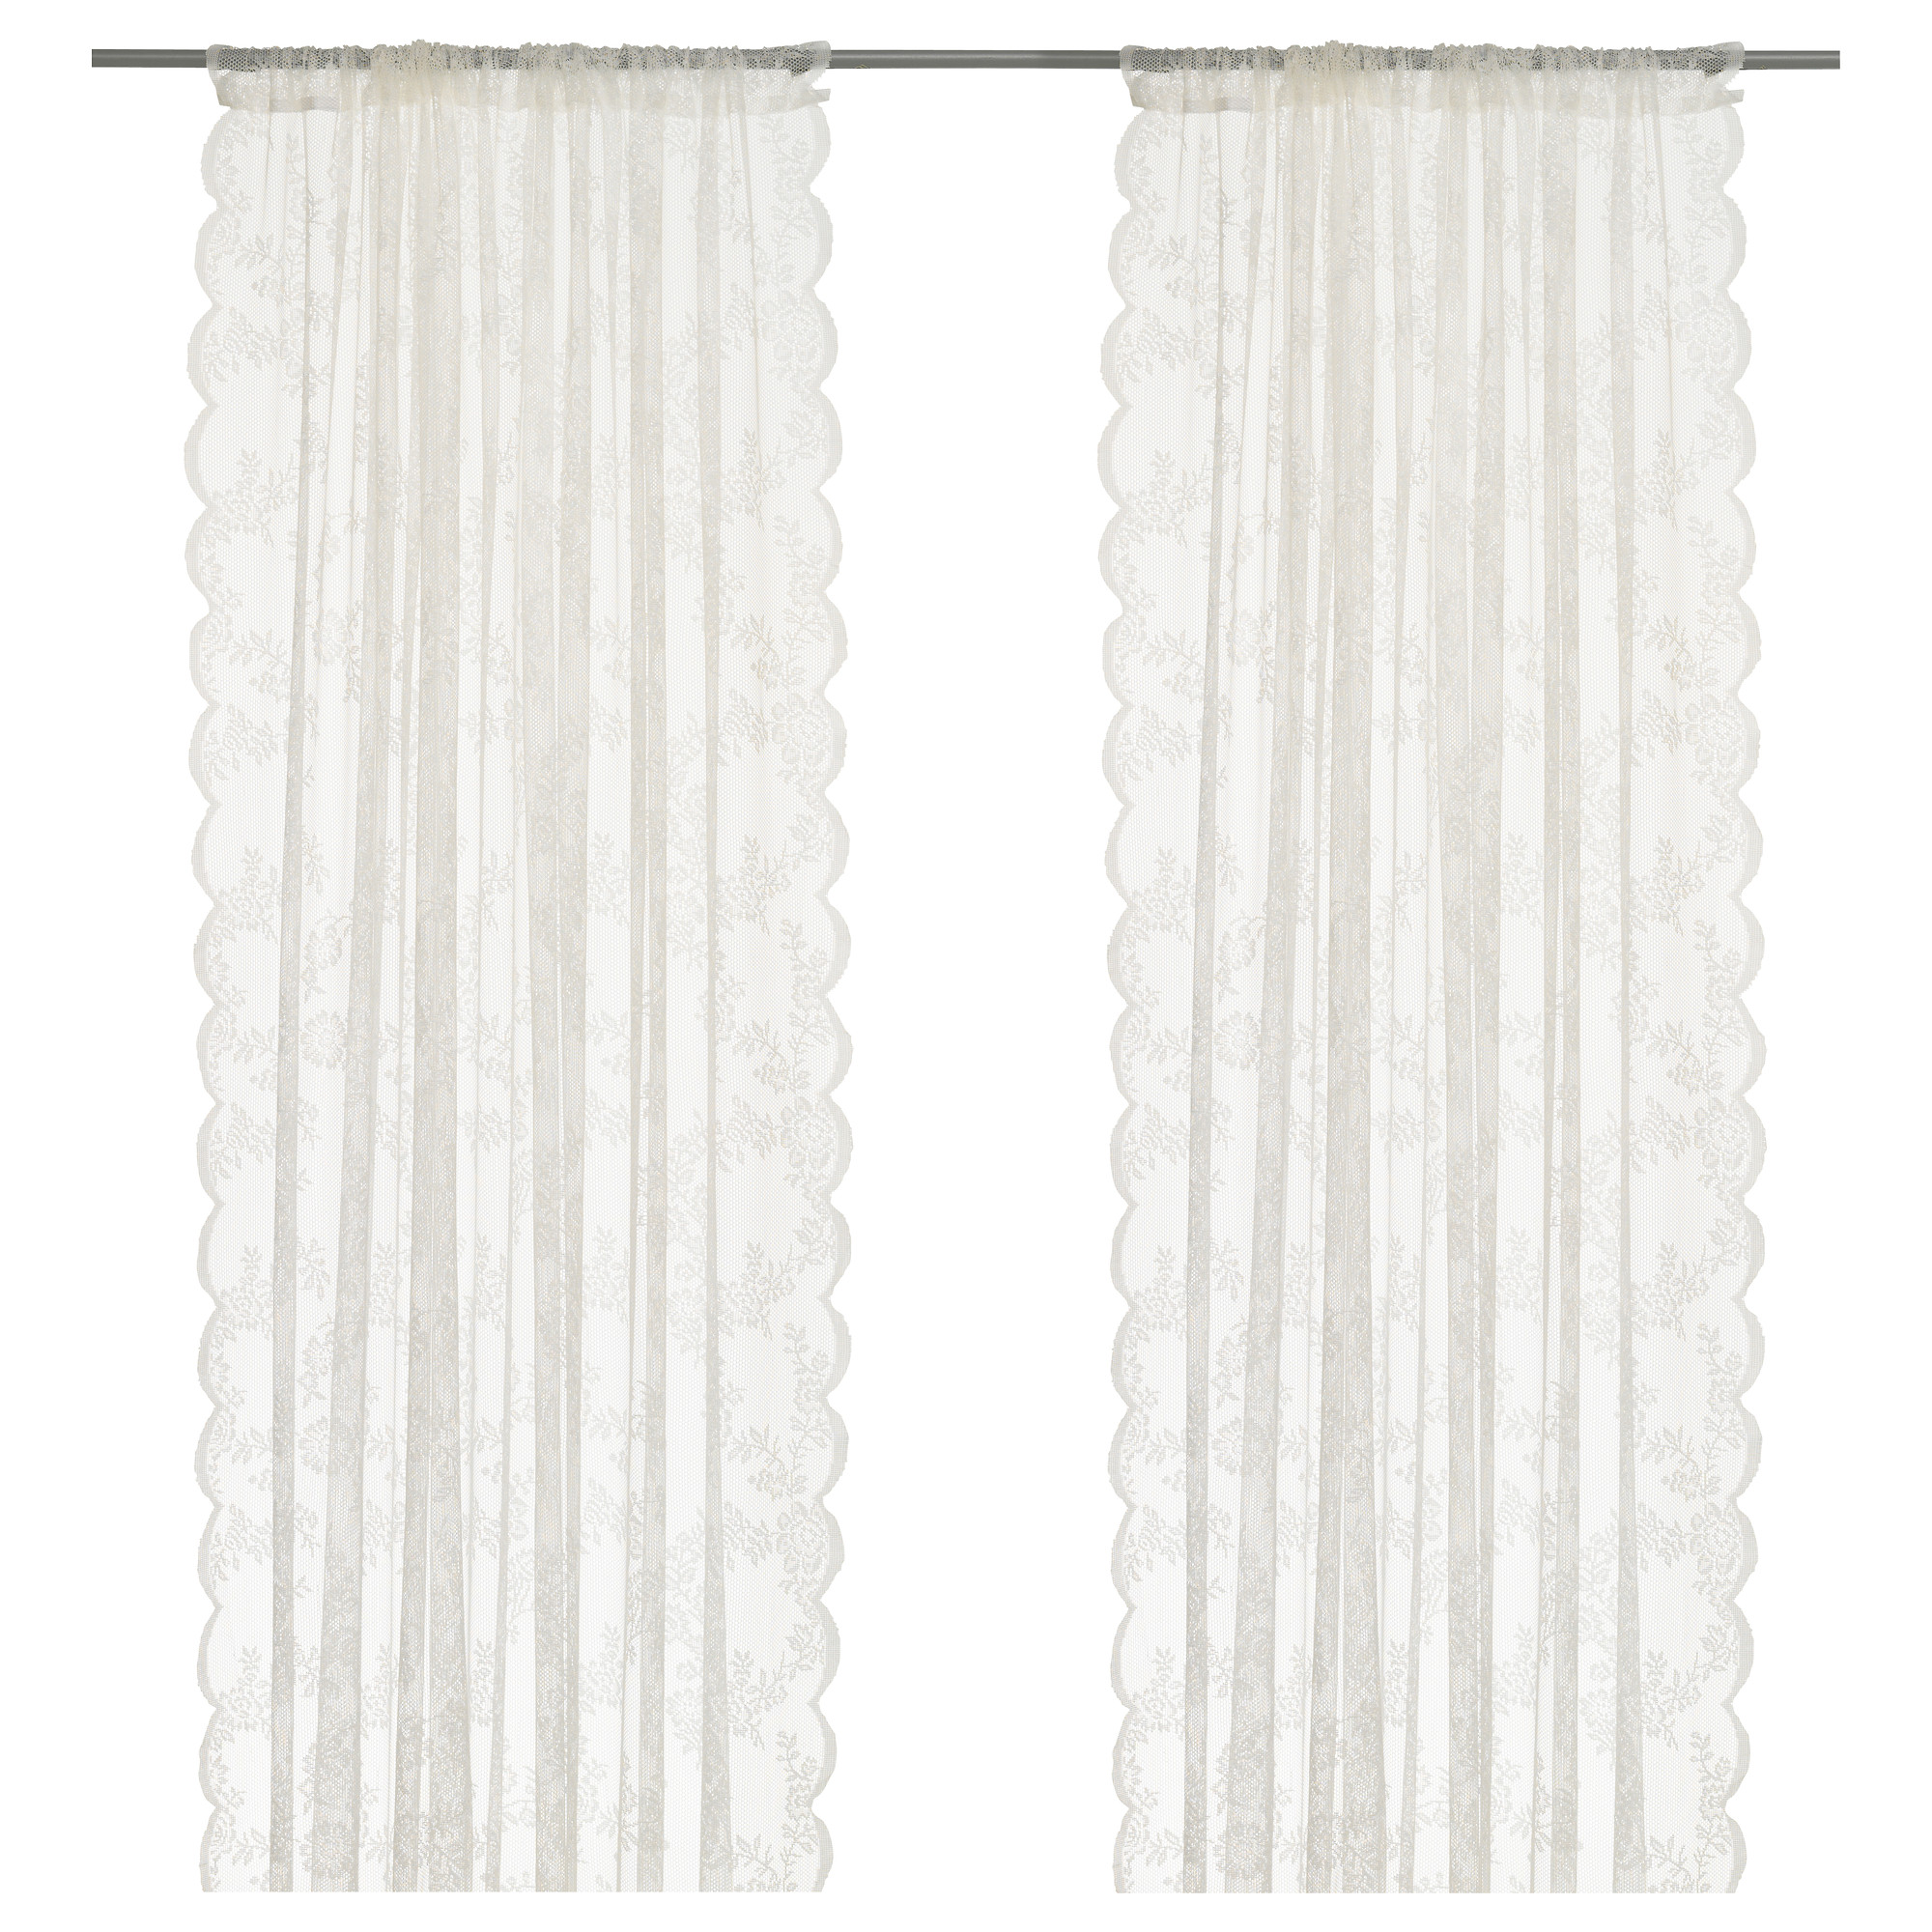 ALVINE SPETS net curtains, 1 pair